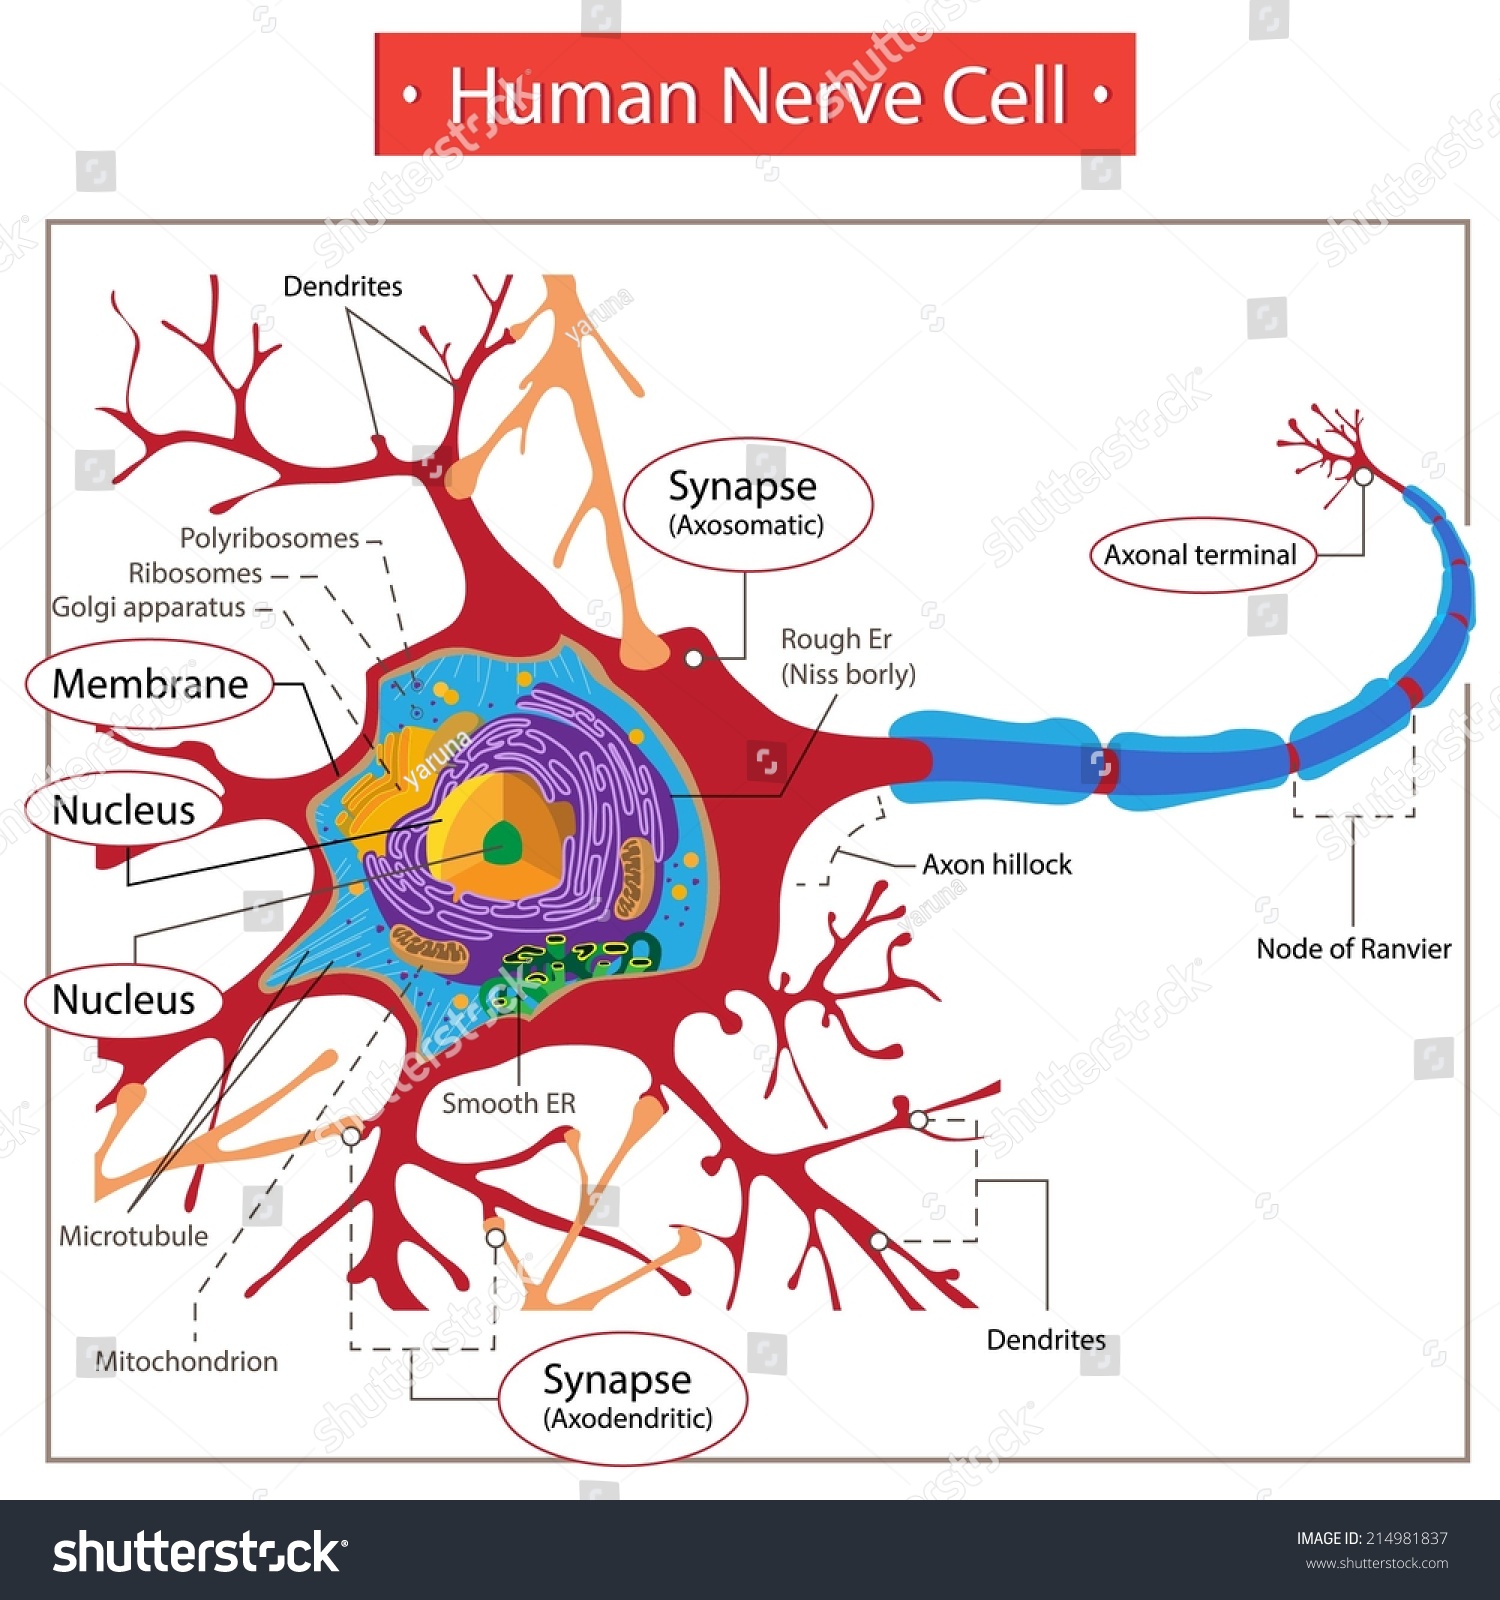 Human Nerve Cell. Stock Vector 214981837 : Shutterstock